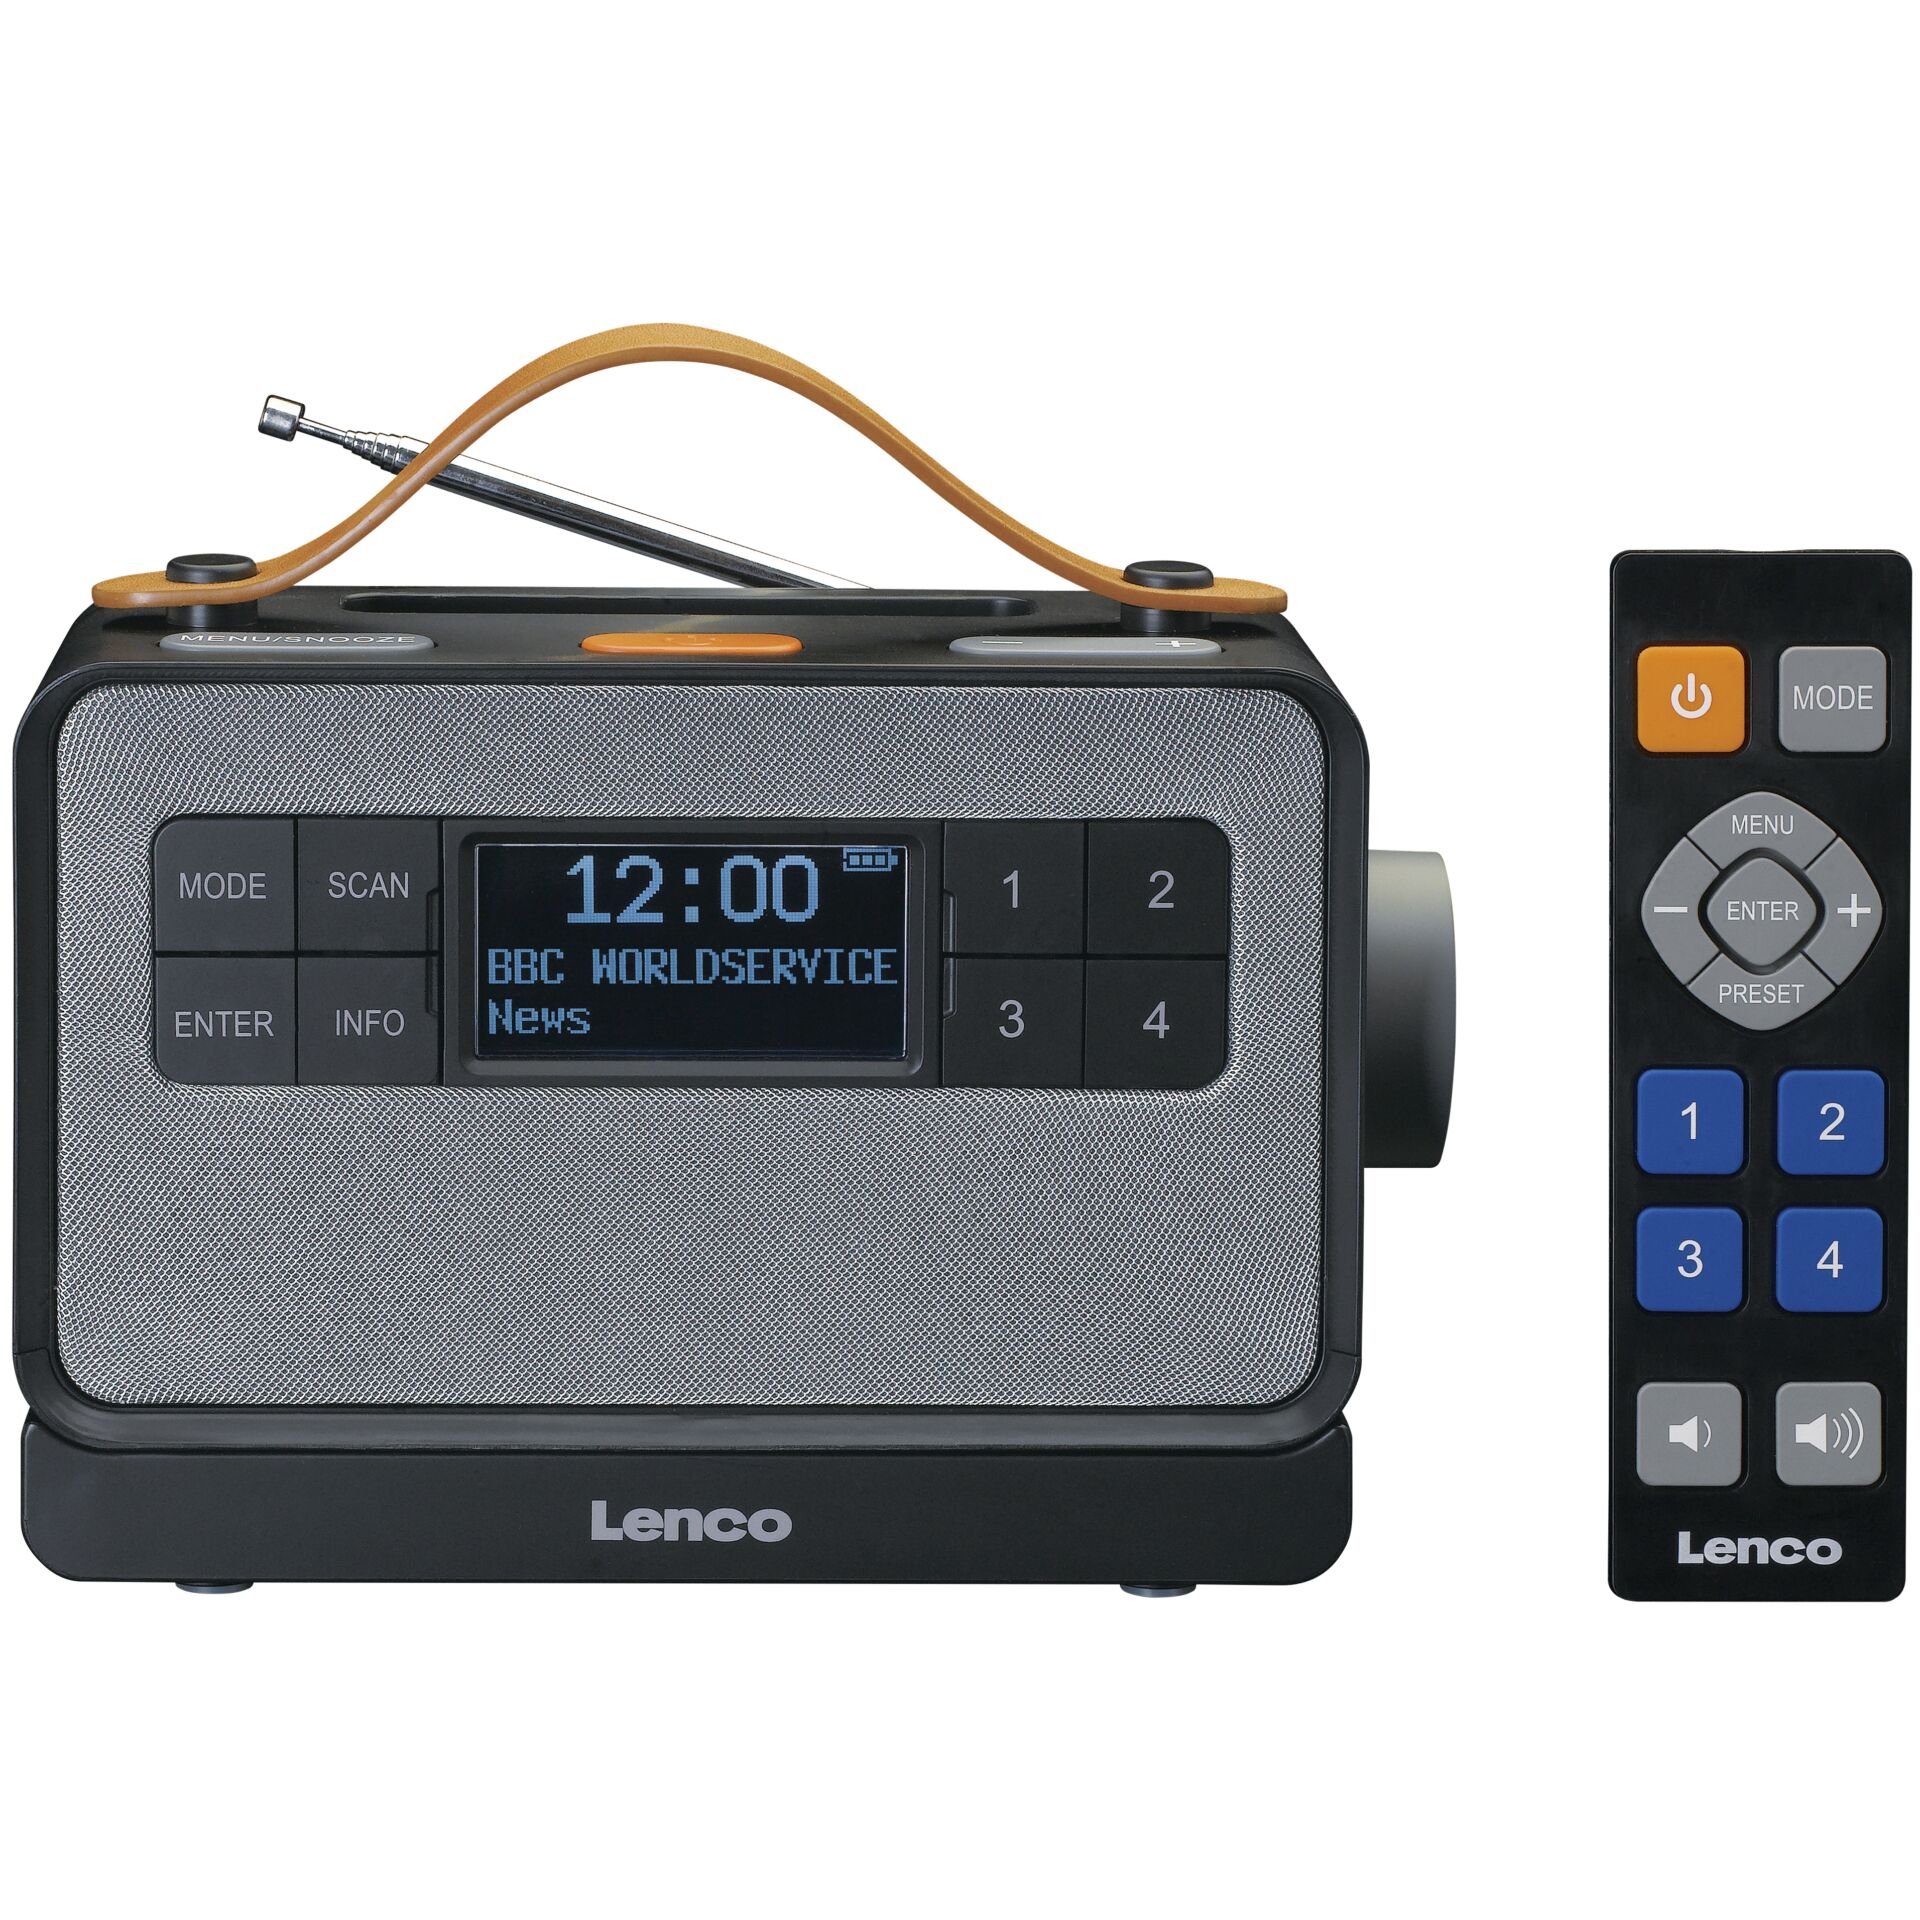 schwarz Hardware/Electronic -Lenco (PDR-065BK) -PDR-065 Lenco